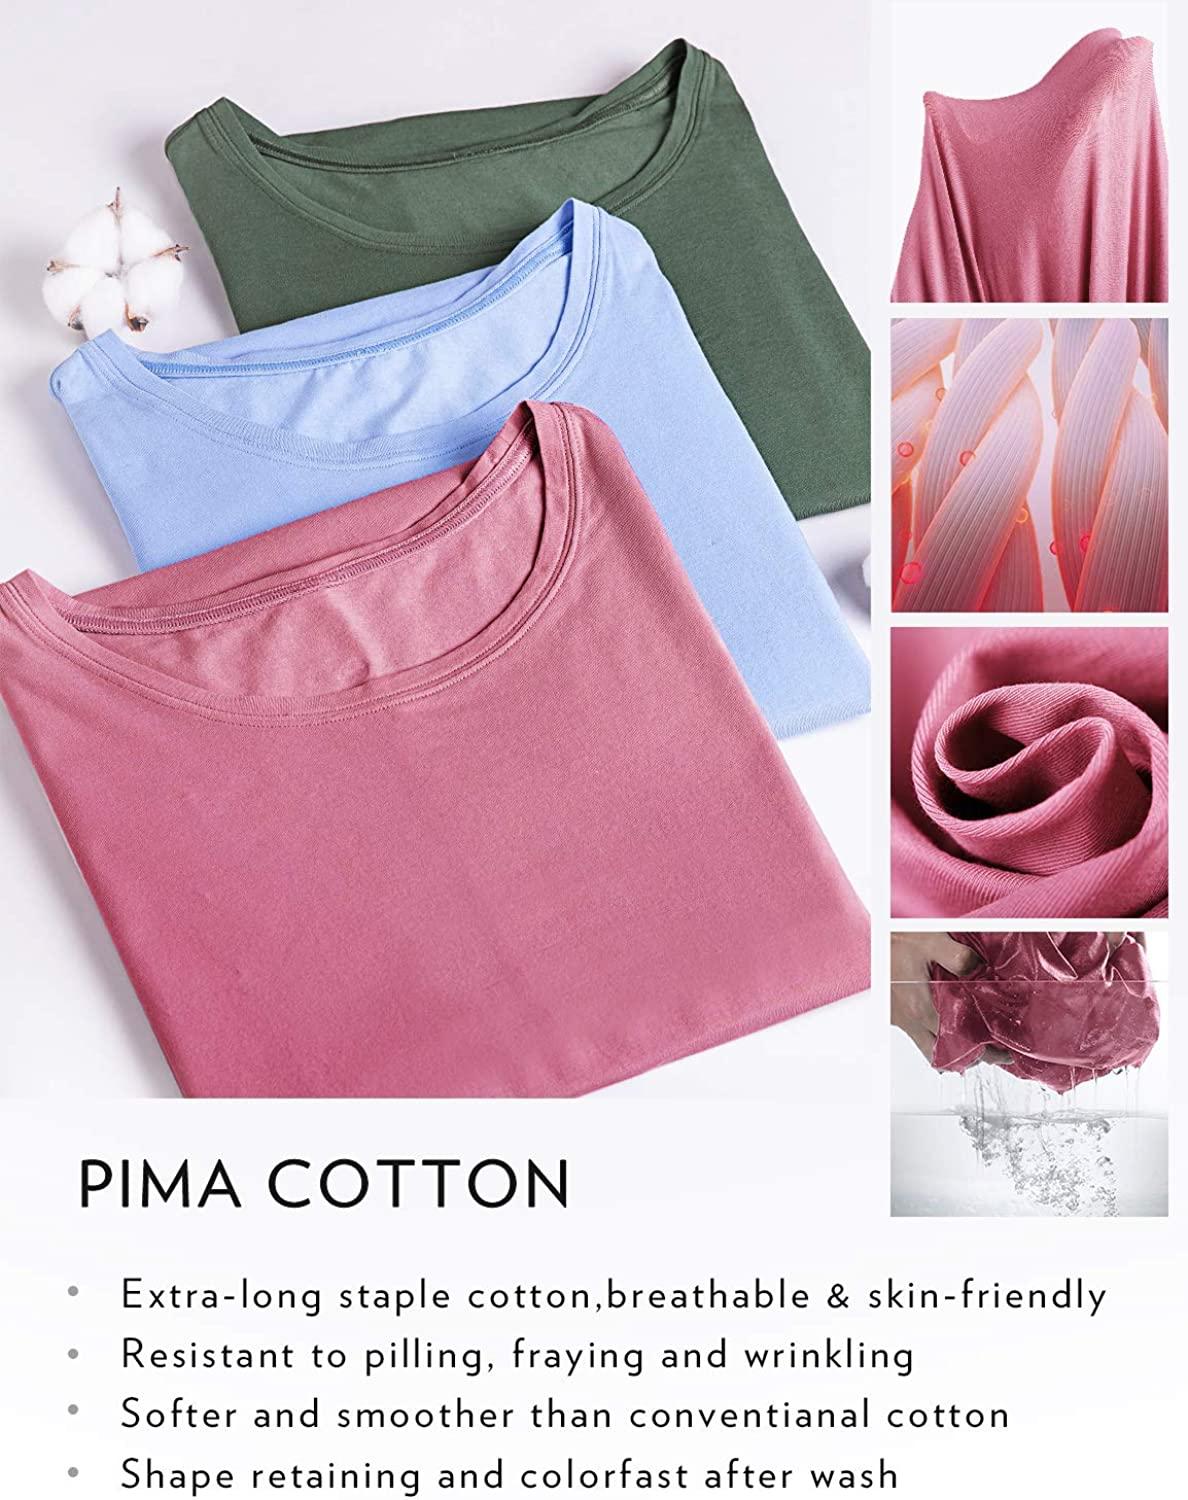 CRZ YOGA Pima Cotton Women's Hip-Length Tank Top High Neck Yoga Gym Shirts